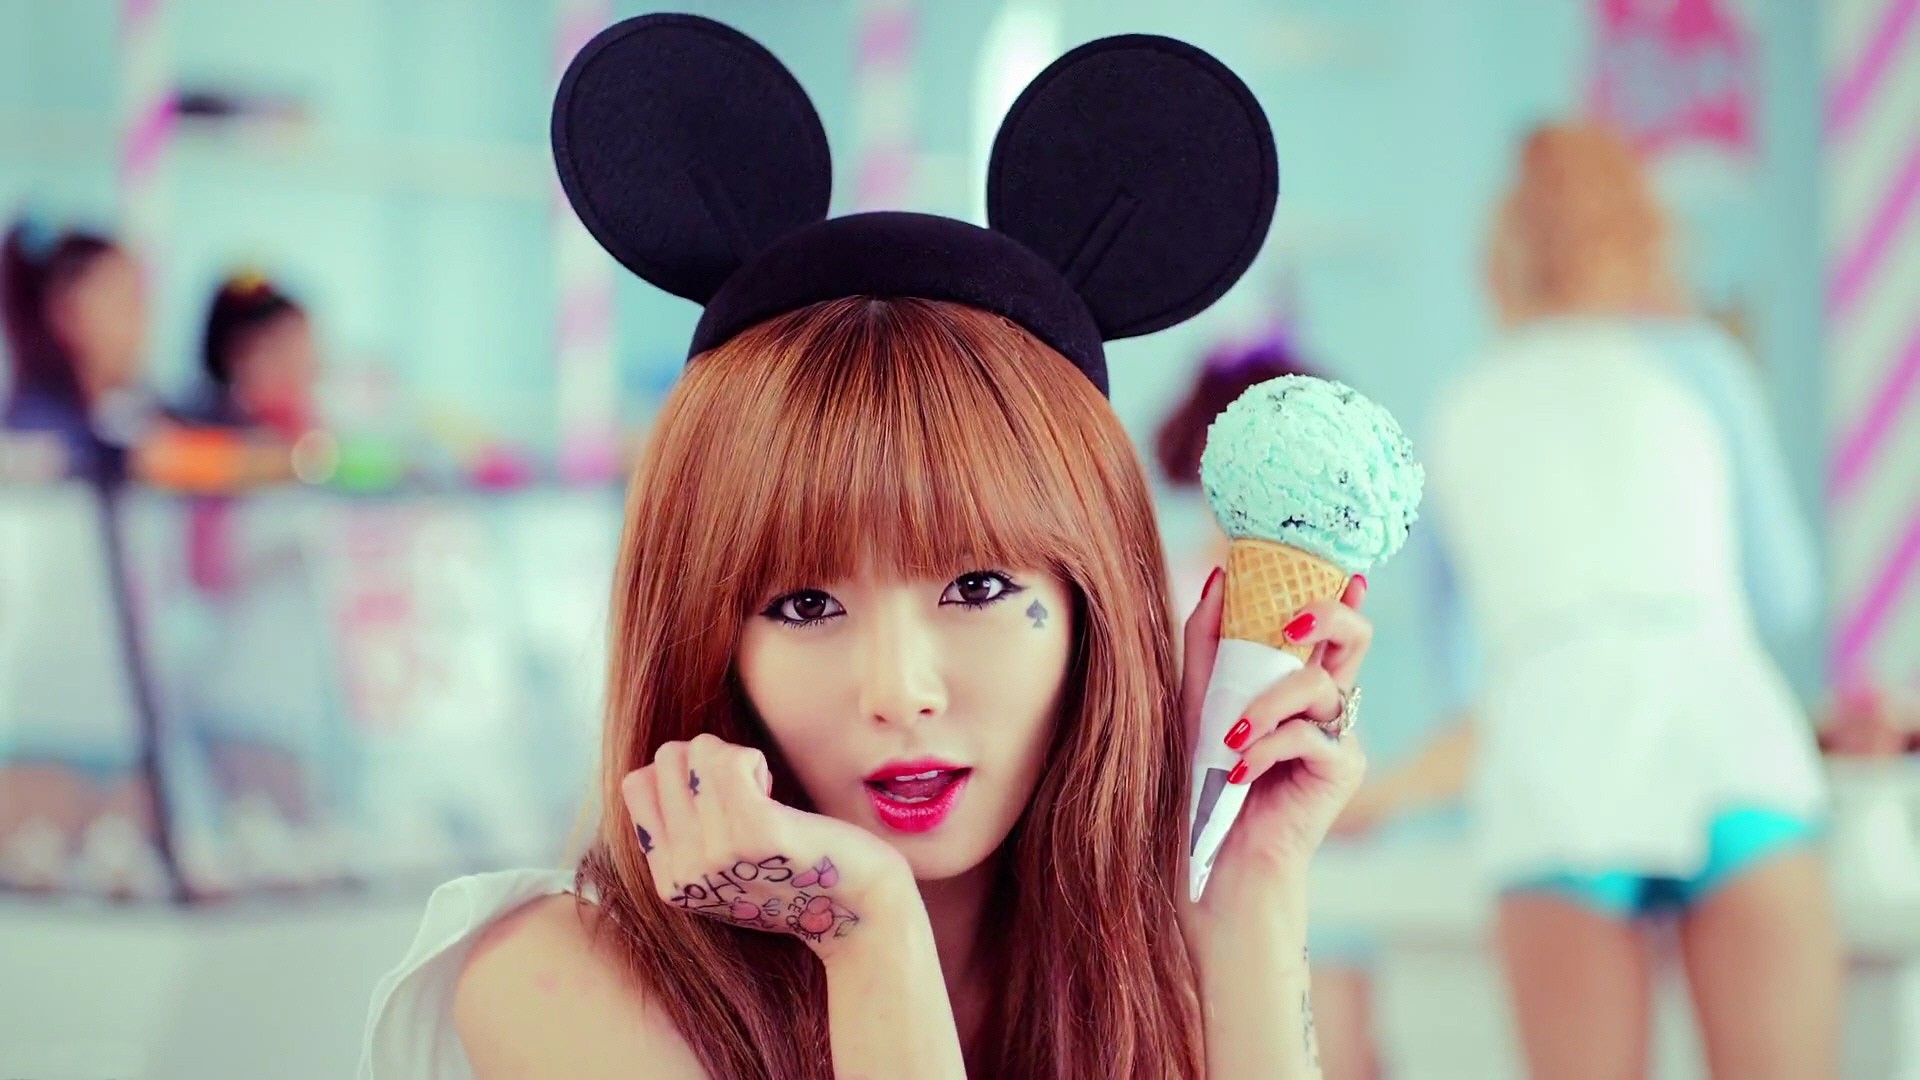 People 1920x1080 Hyuna hairband redhead red lipstick K-pop Korean singer Korean women mouse ears food sweets ice cream makeup dyed hair lipstick inked girls women Asian